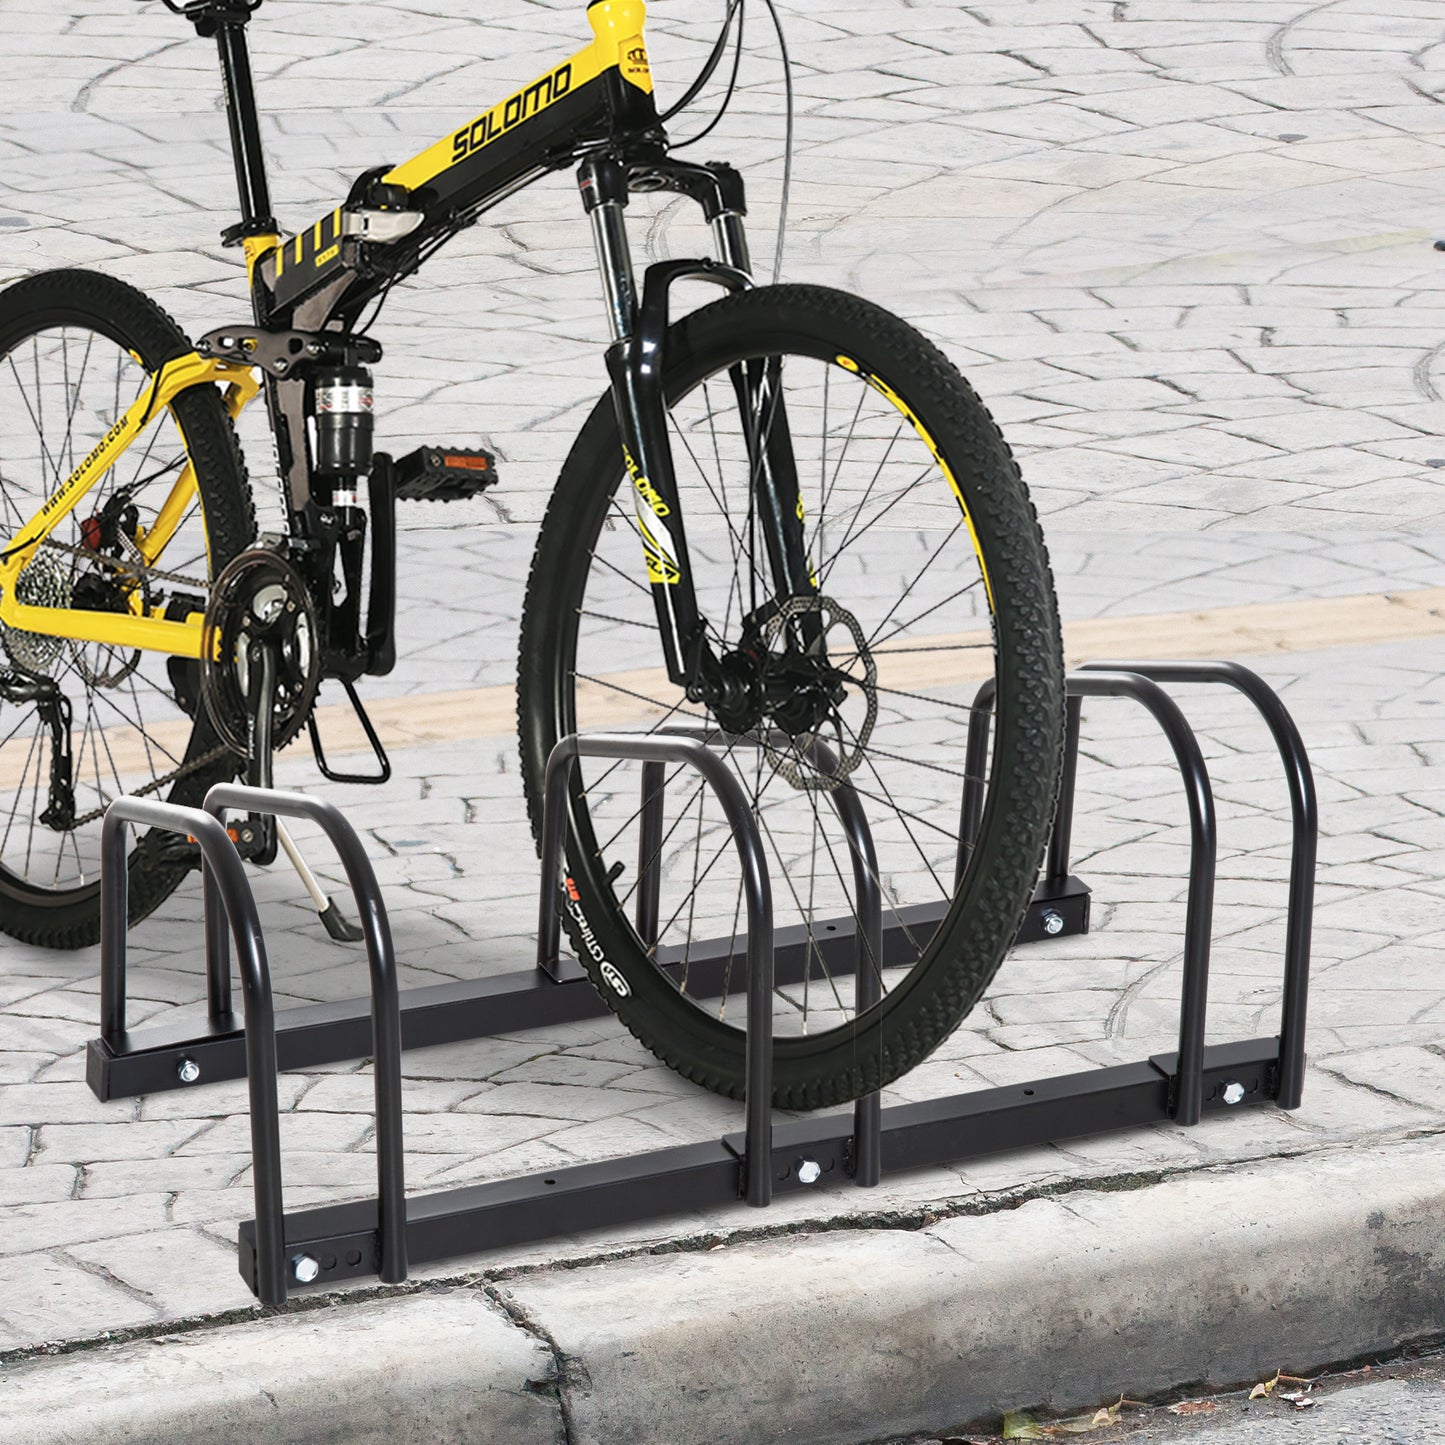 HOMCOM Bike Parking Rack, 70.5Lx33Wx27H cm, Steel-Black